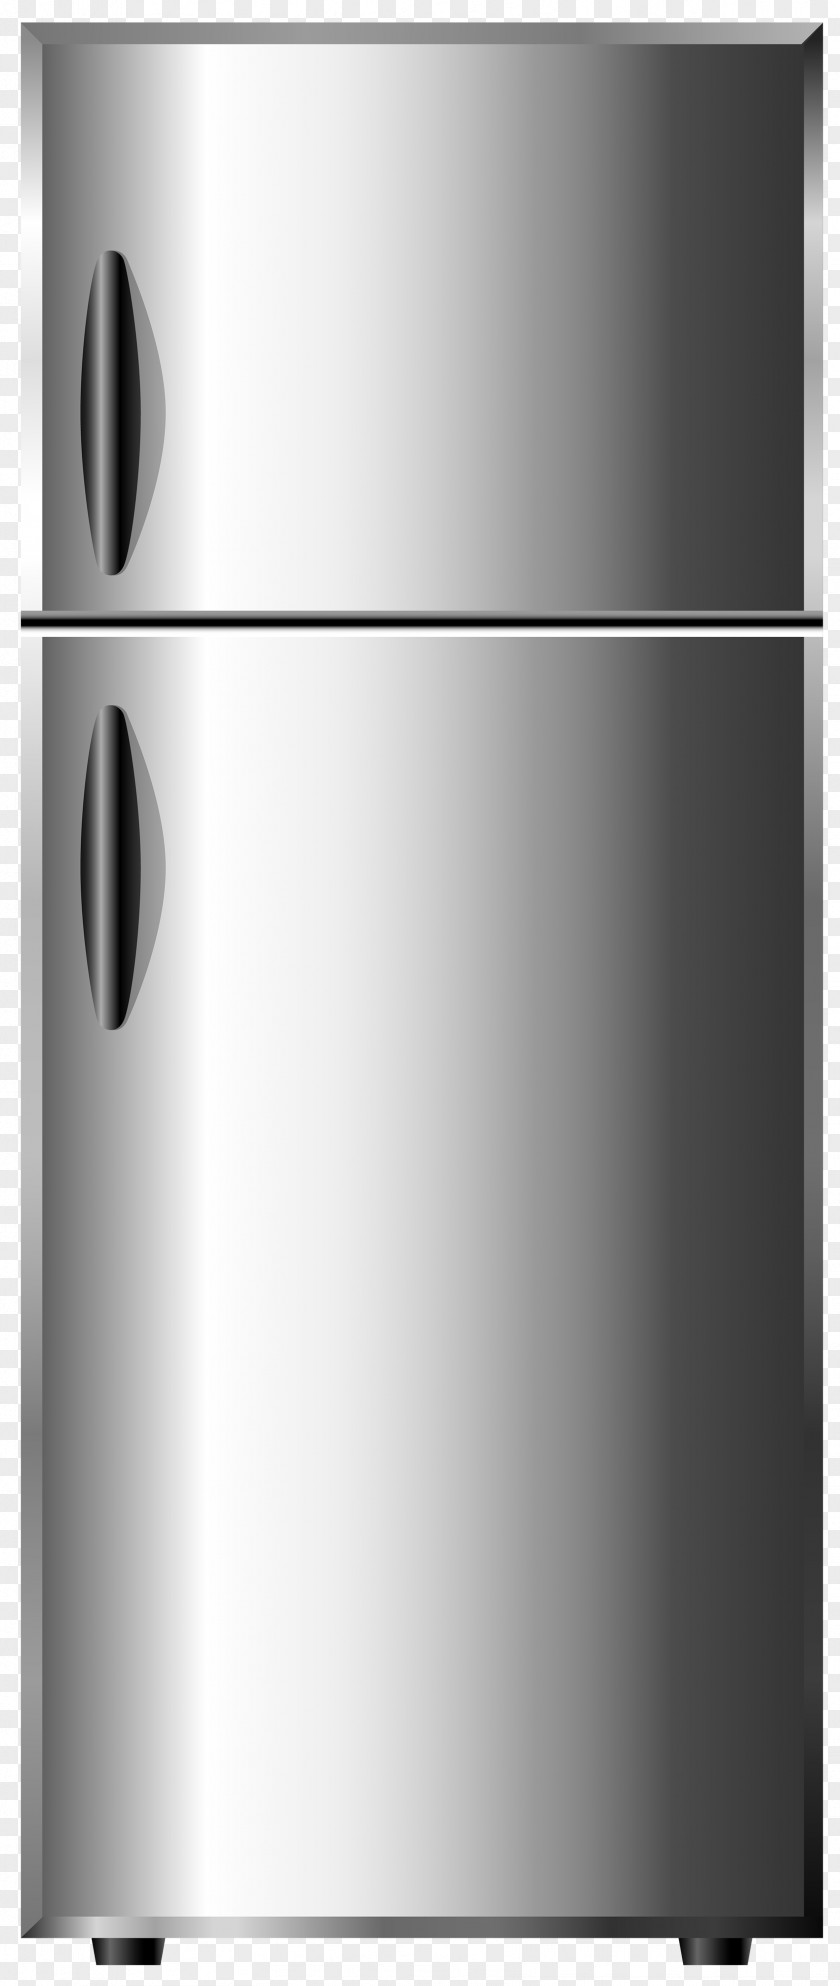 Refrigerator Royalty-free Clip Art PNG